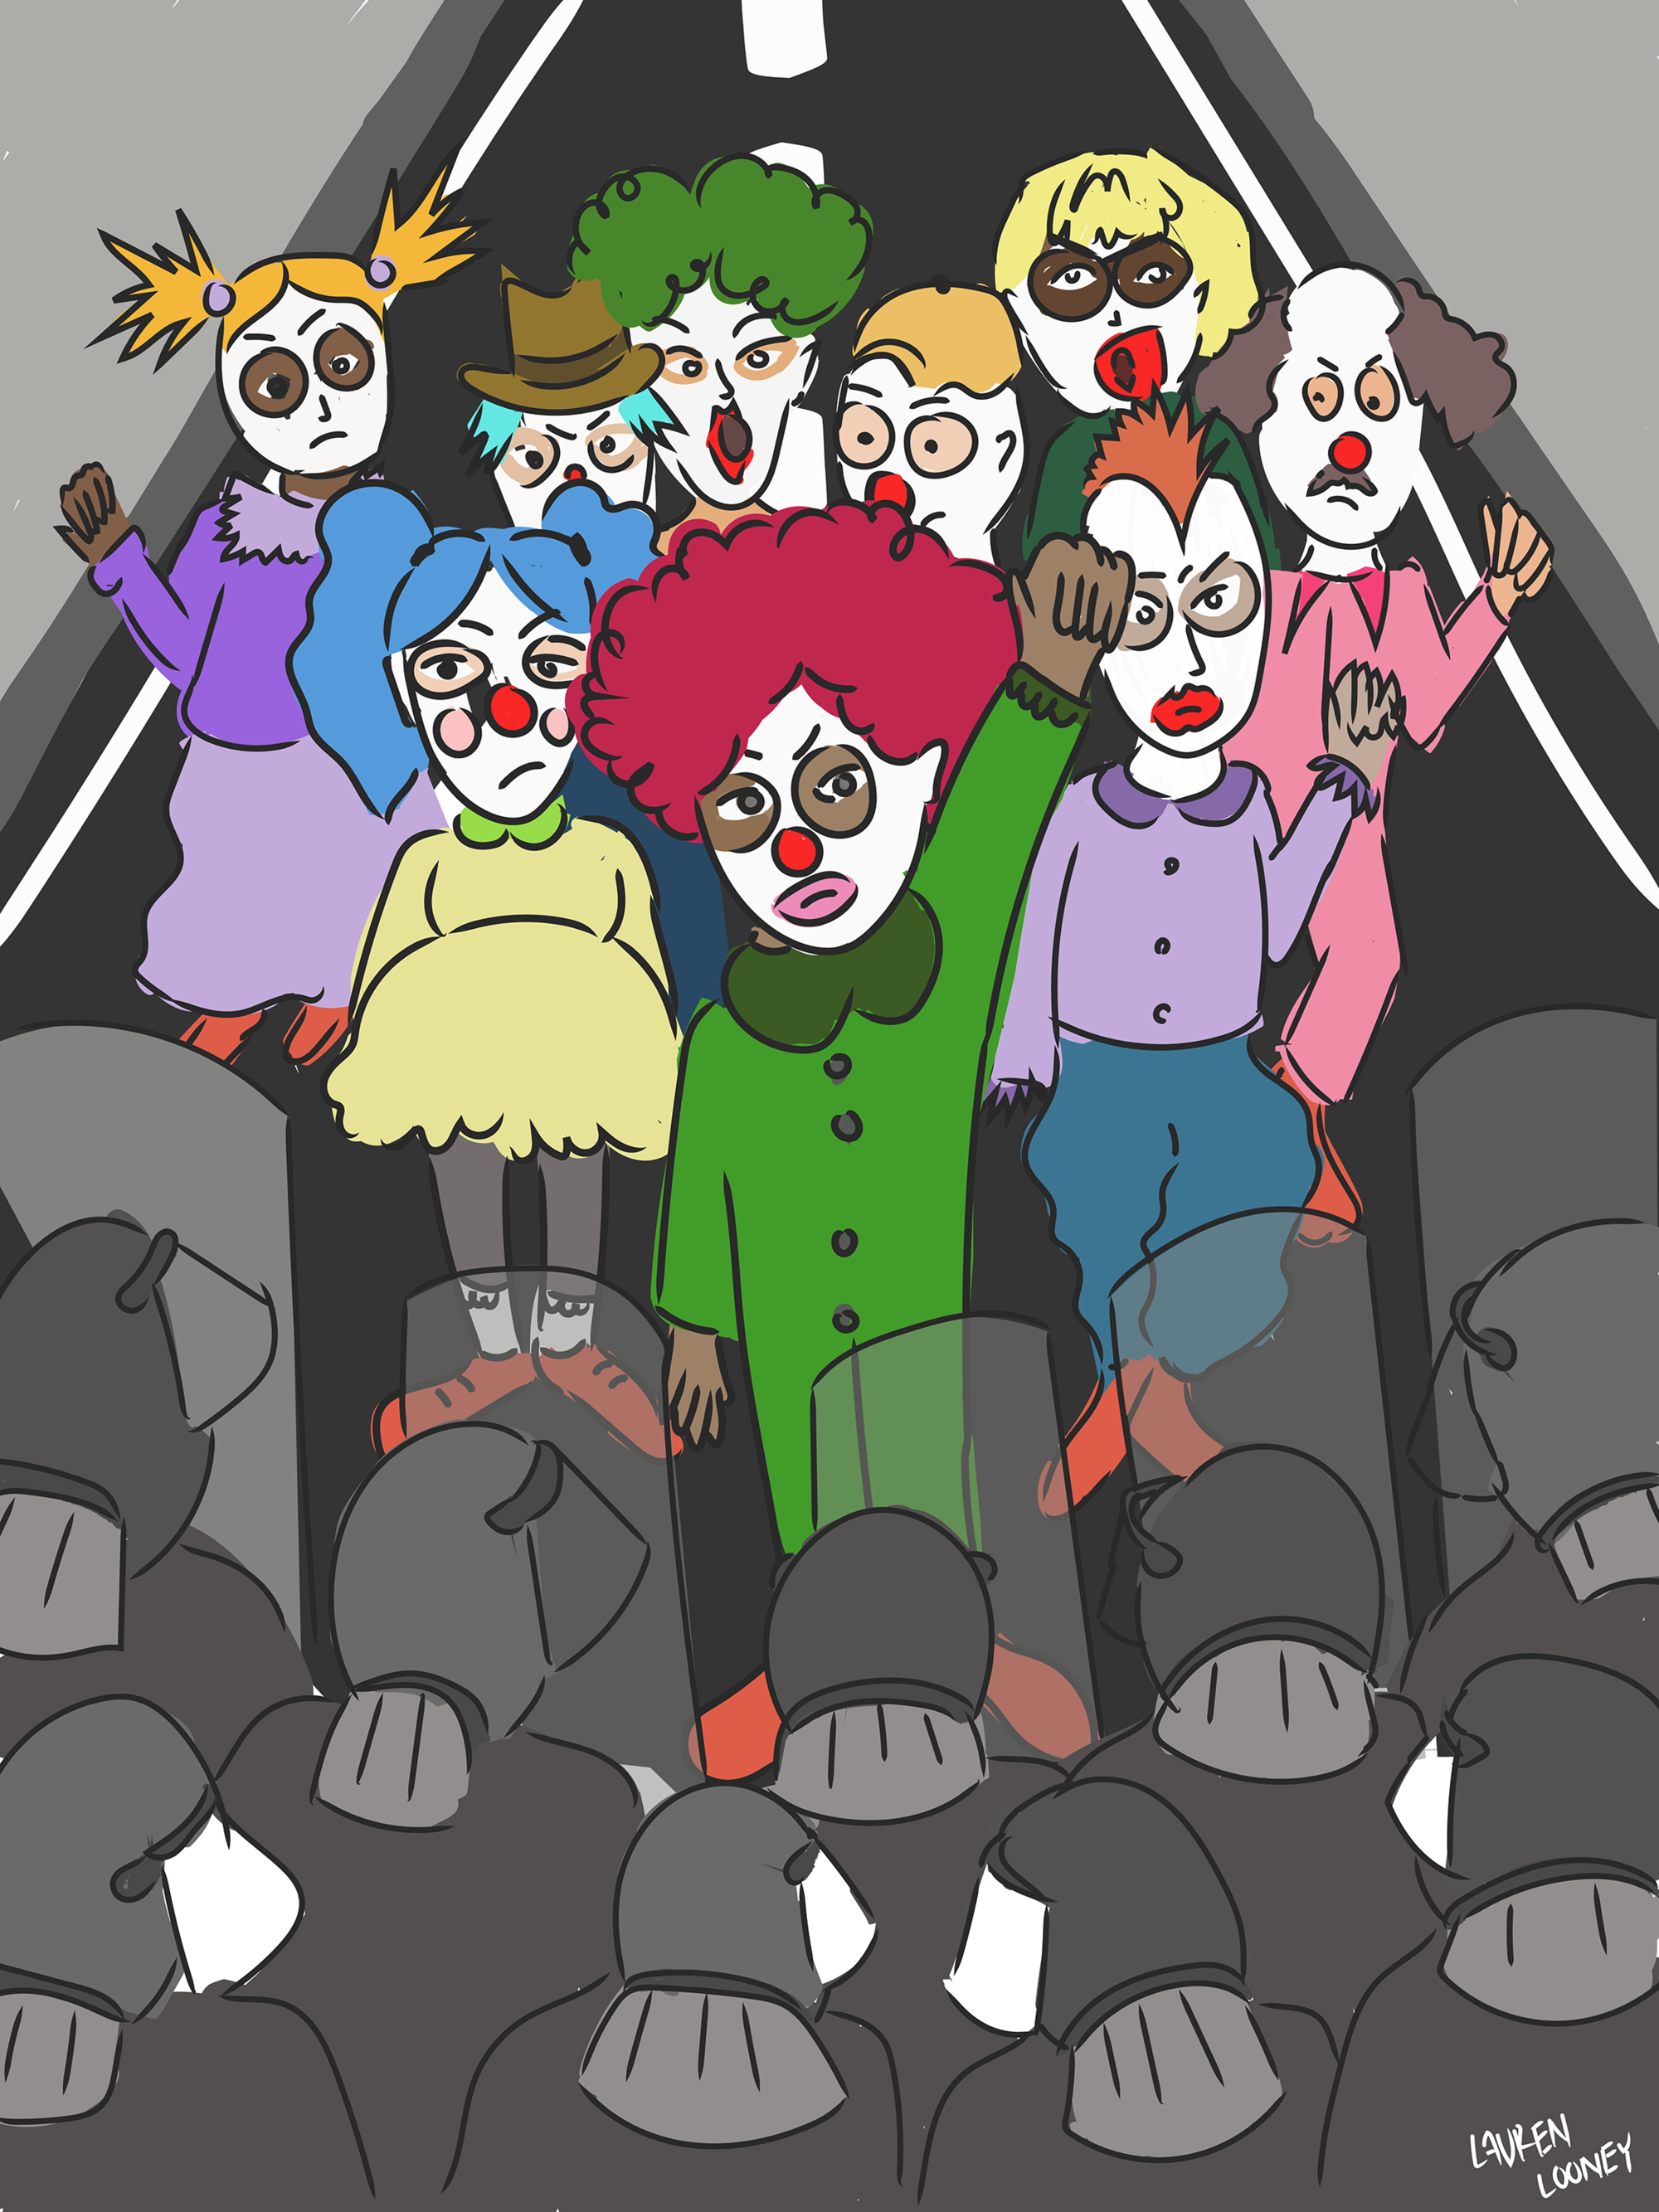 an illustration of clowns